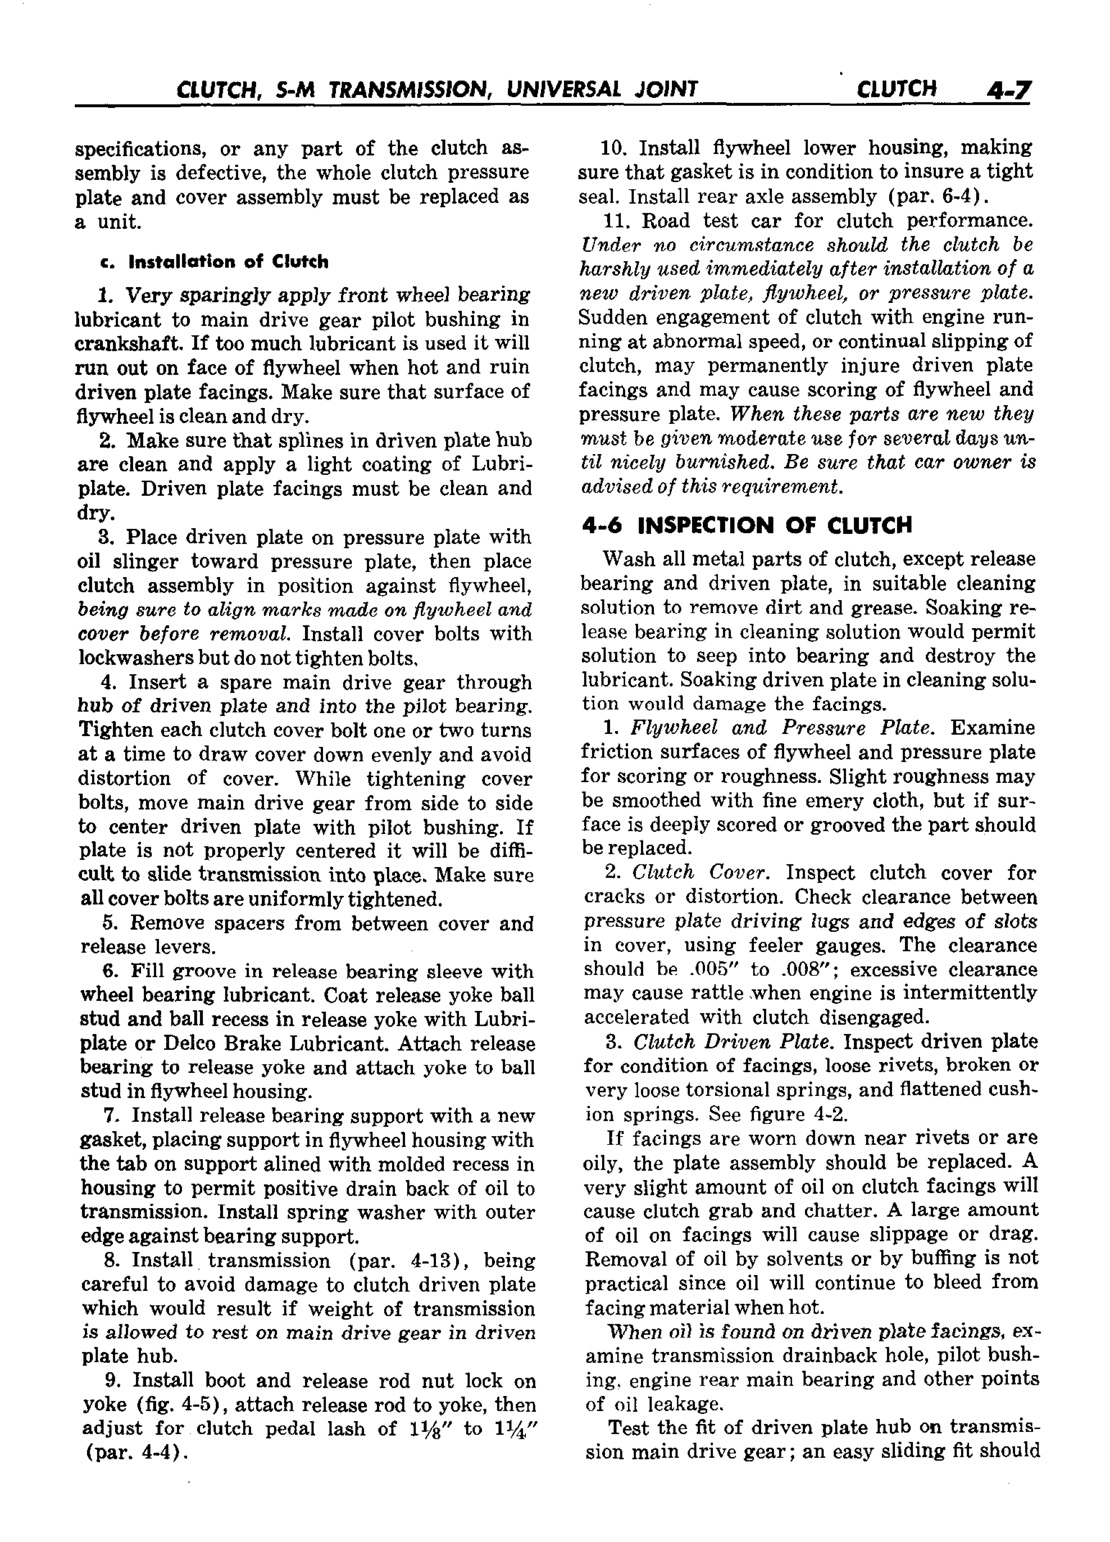 n_05 1959 Buick Shop Manual - Clutch & Man Trans-007-007.jpg